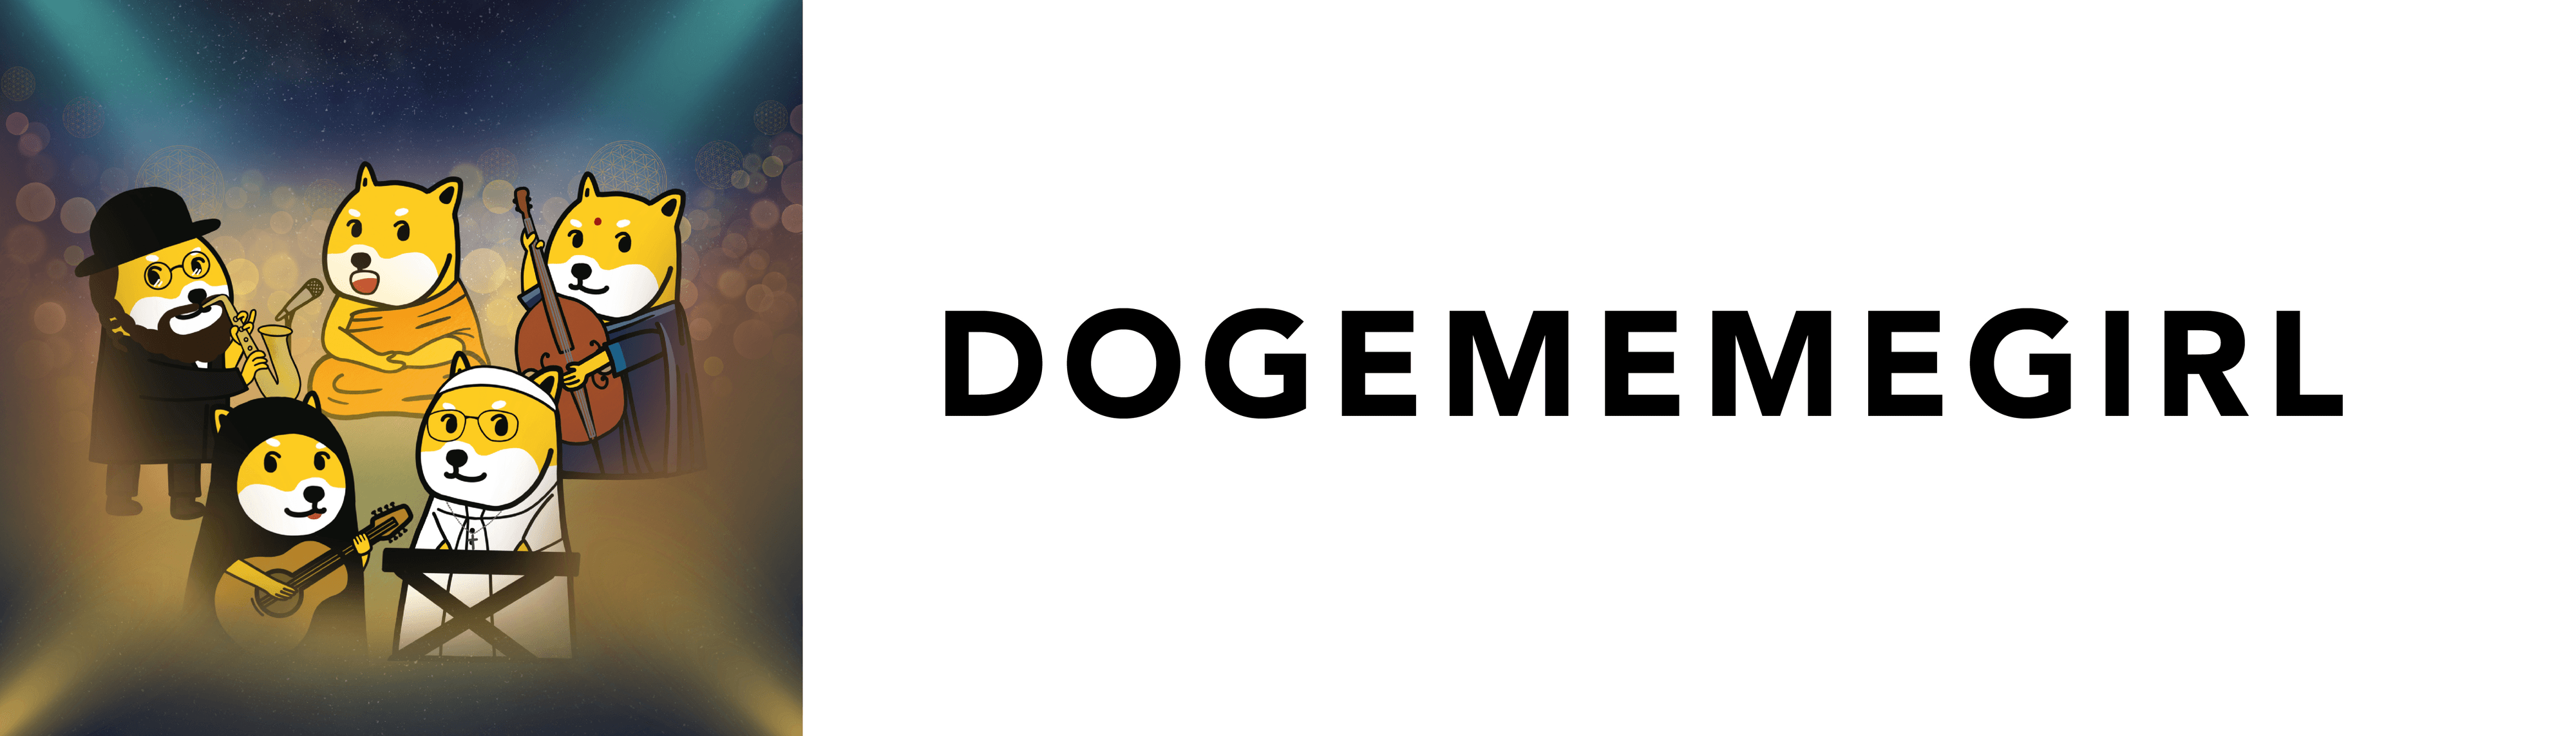 Dogememegirl banner